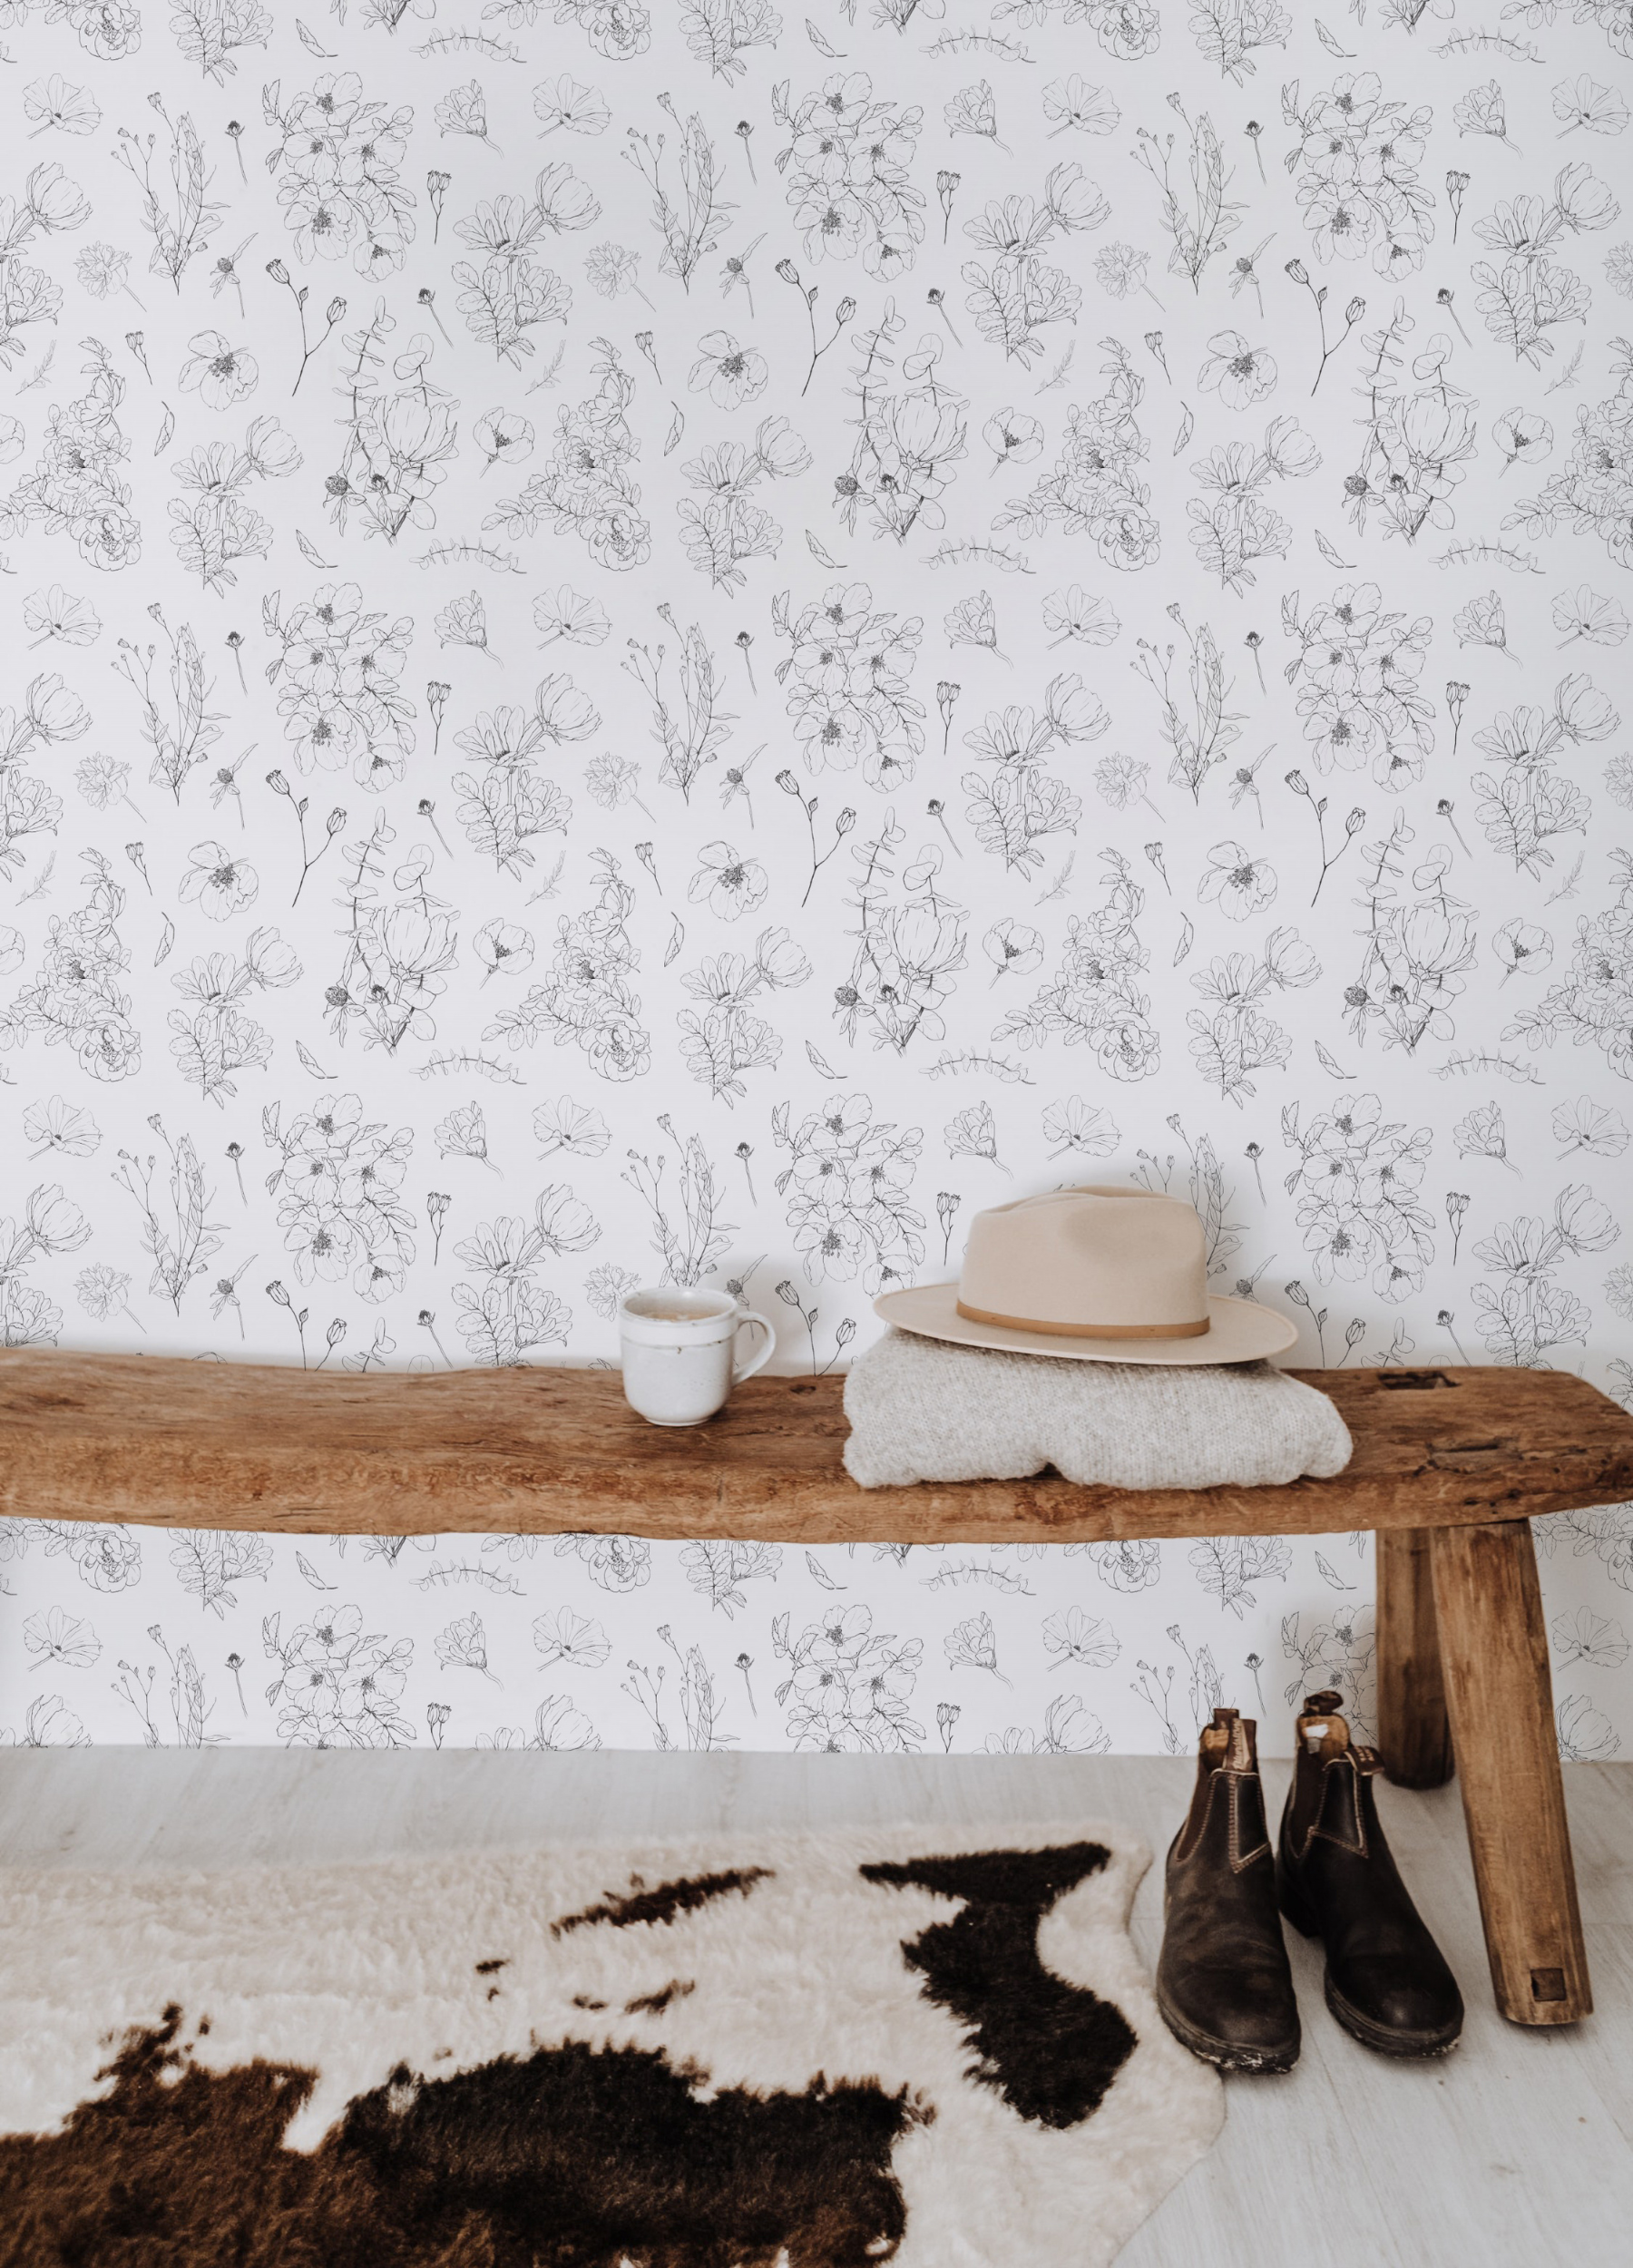 wallpaper, peel and stick wallpaper, Home decor, wildflower sketch wallpaper, floral wallpaper, black on white wallpaper, bedroom wallpapers, sketched wallpaper, 